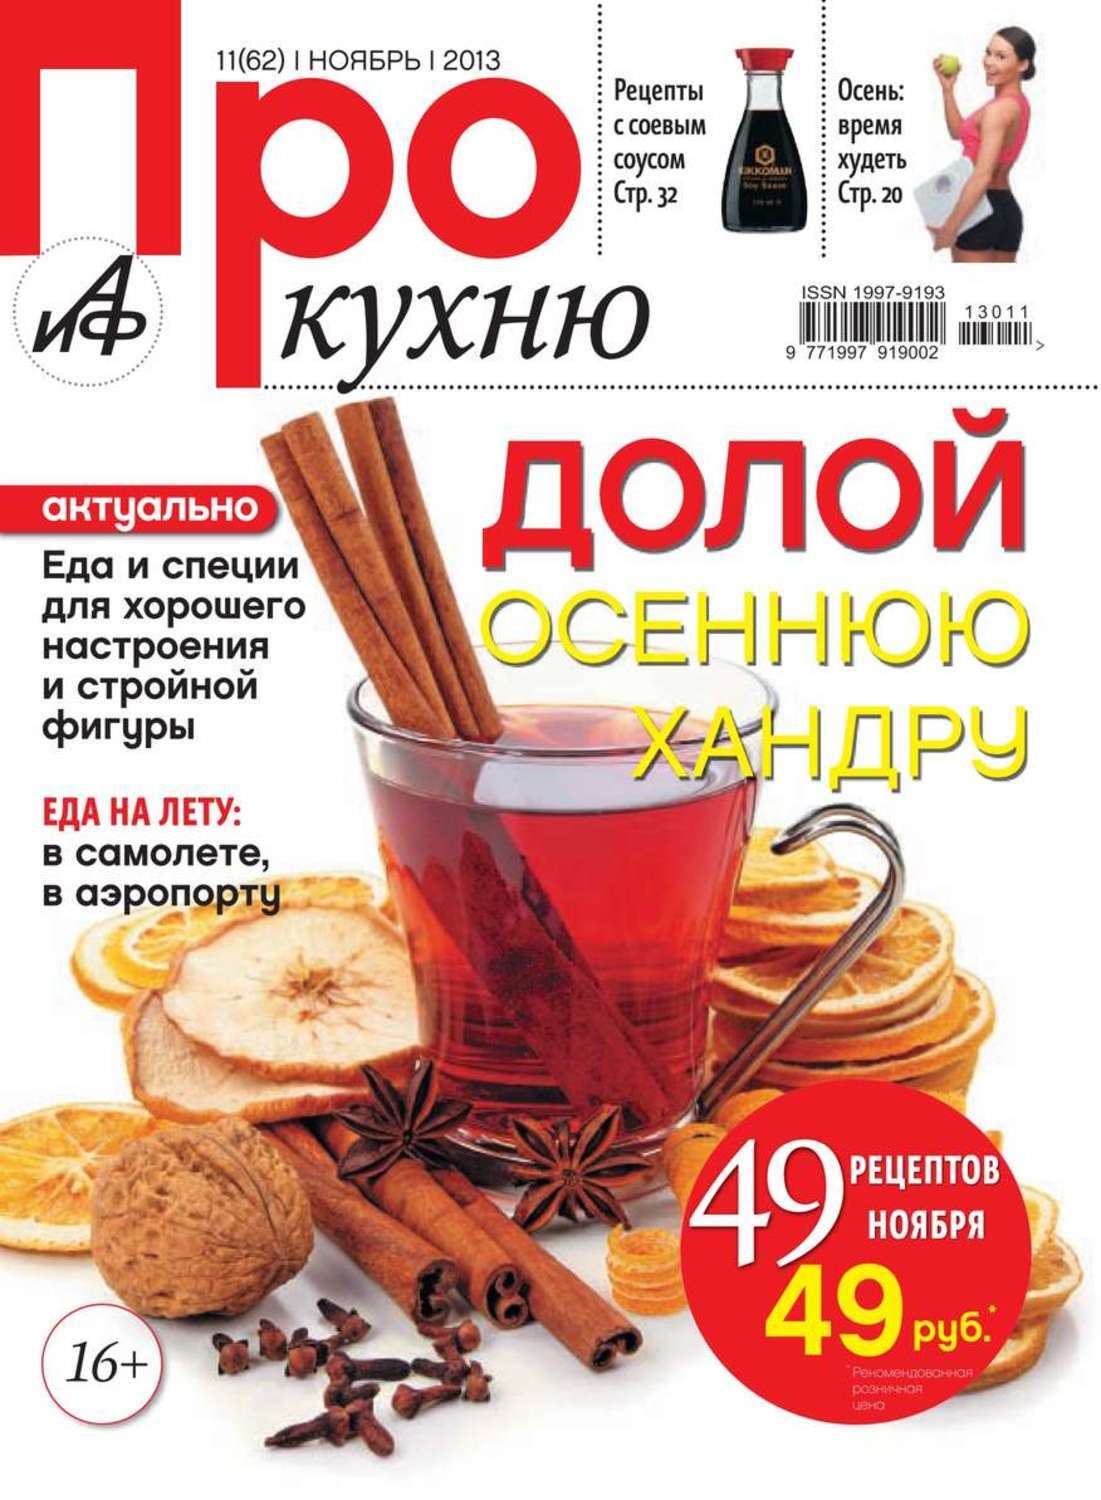 Про кухню журнал. Журнал АИФ про кухню. Журнал про кухню купить.